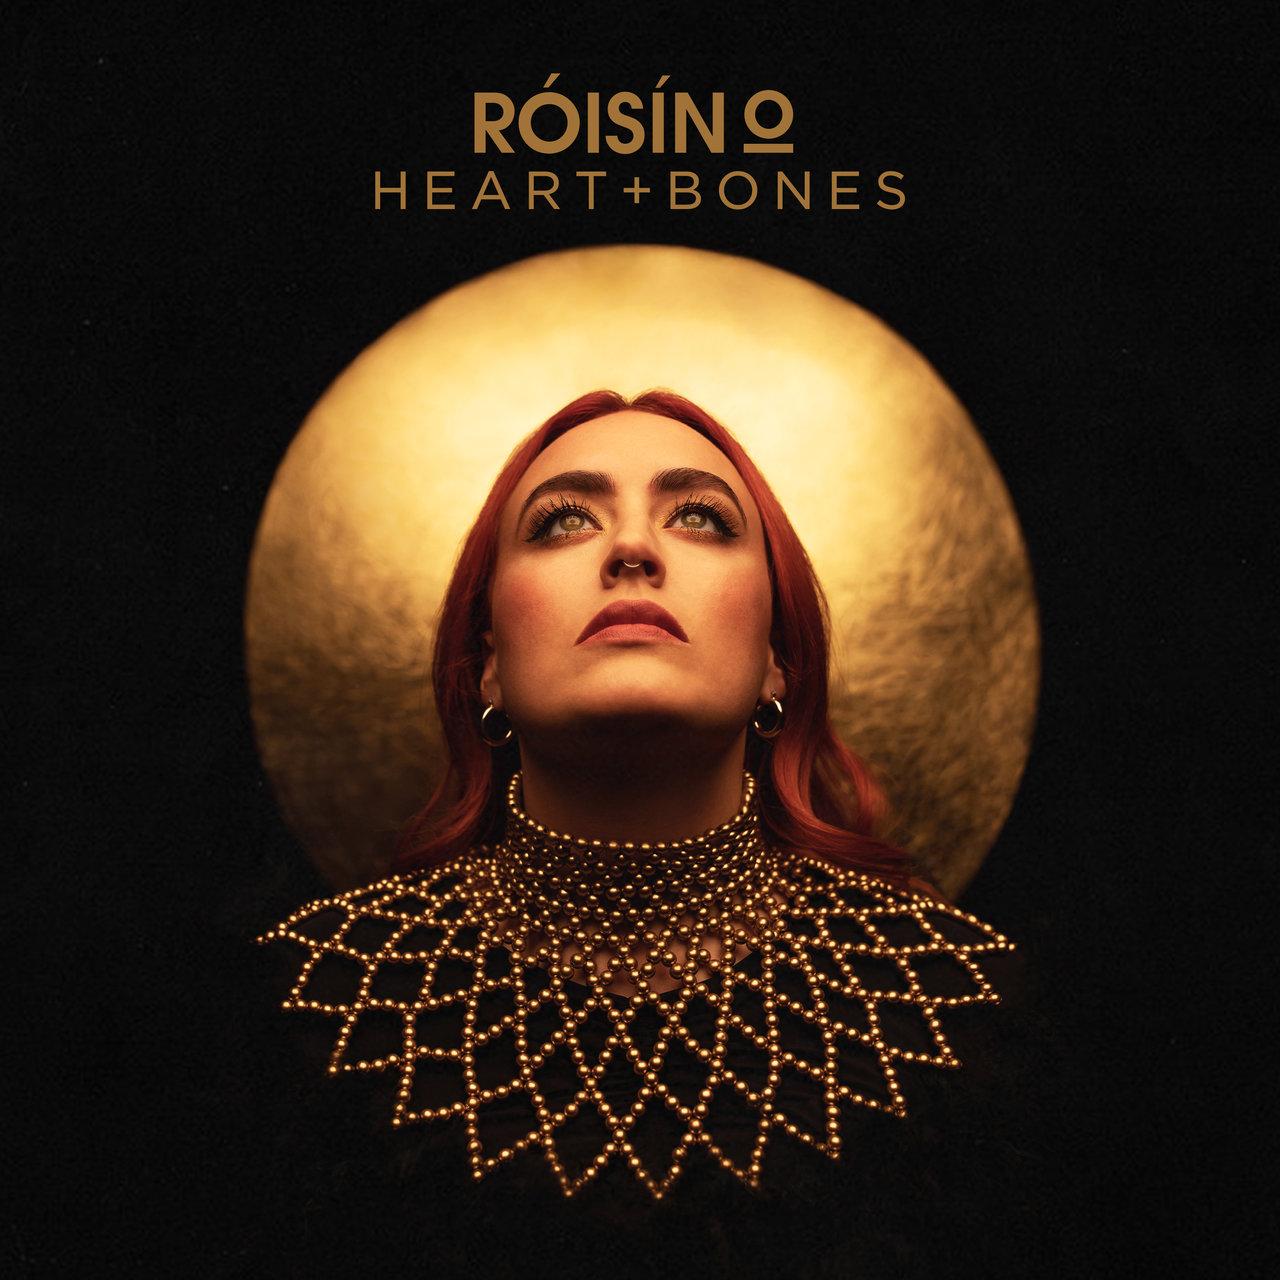 Róisín O Heart + Bones cover artwork